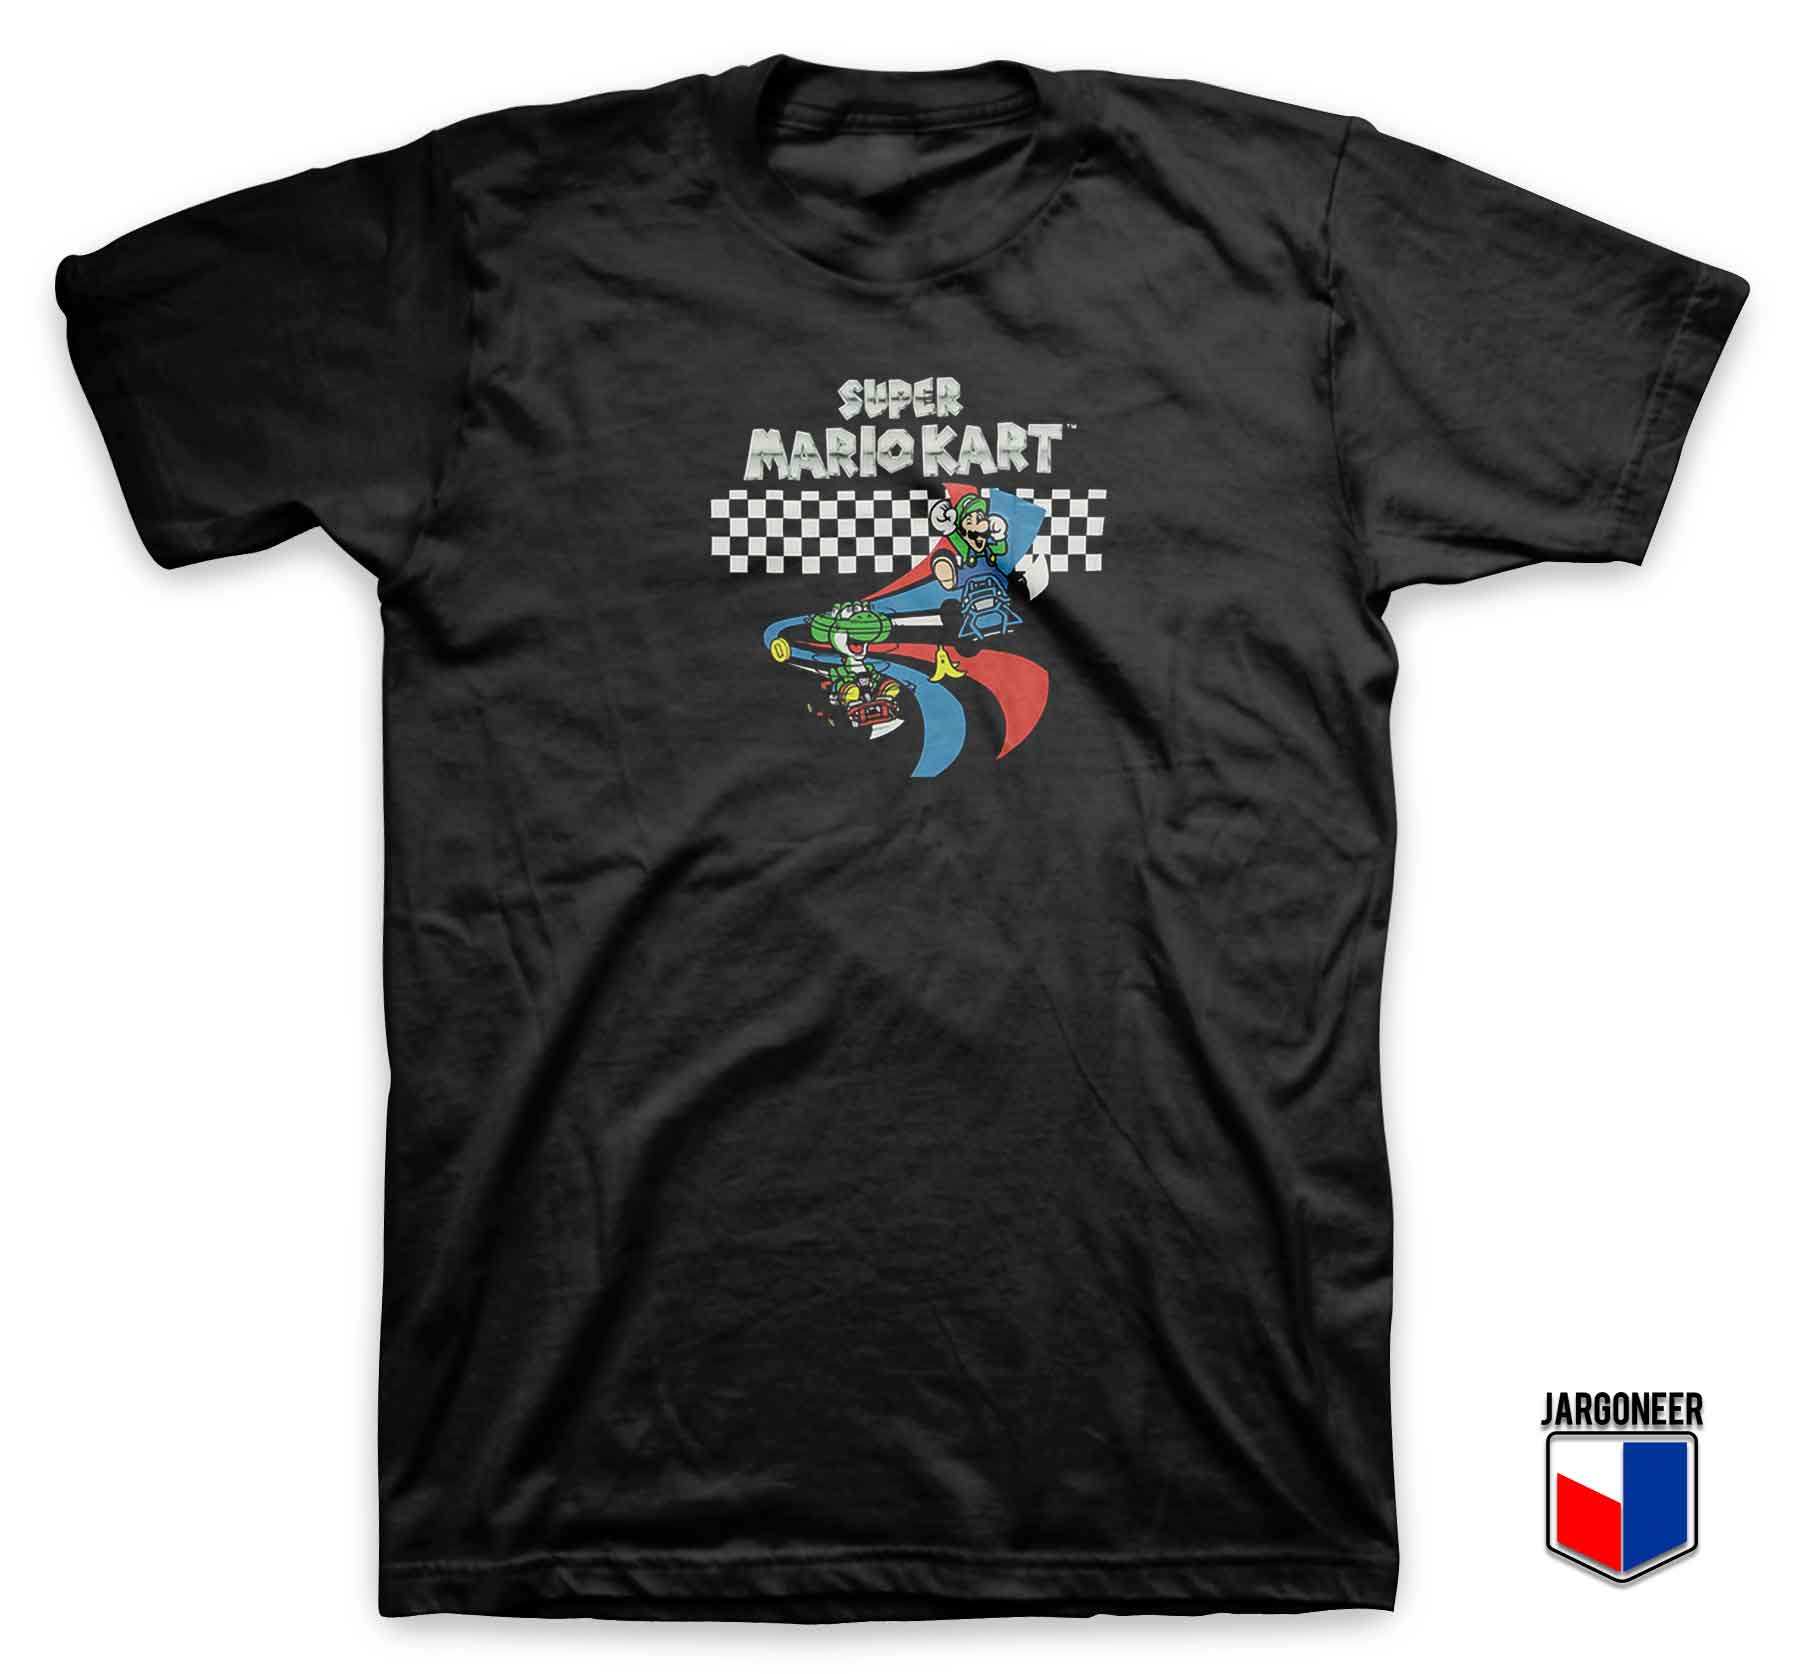 Super Mario Kart - Shop Unique Graphic Cool Shirt Designs